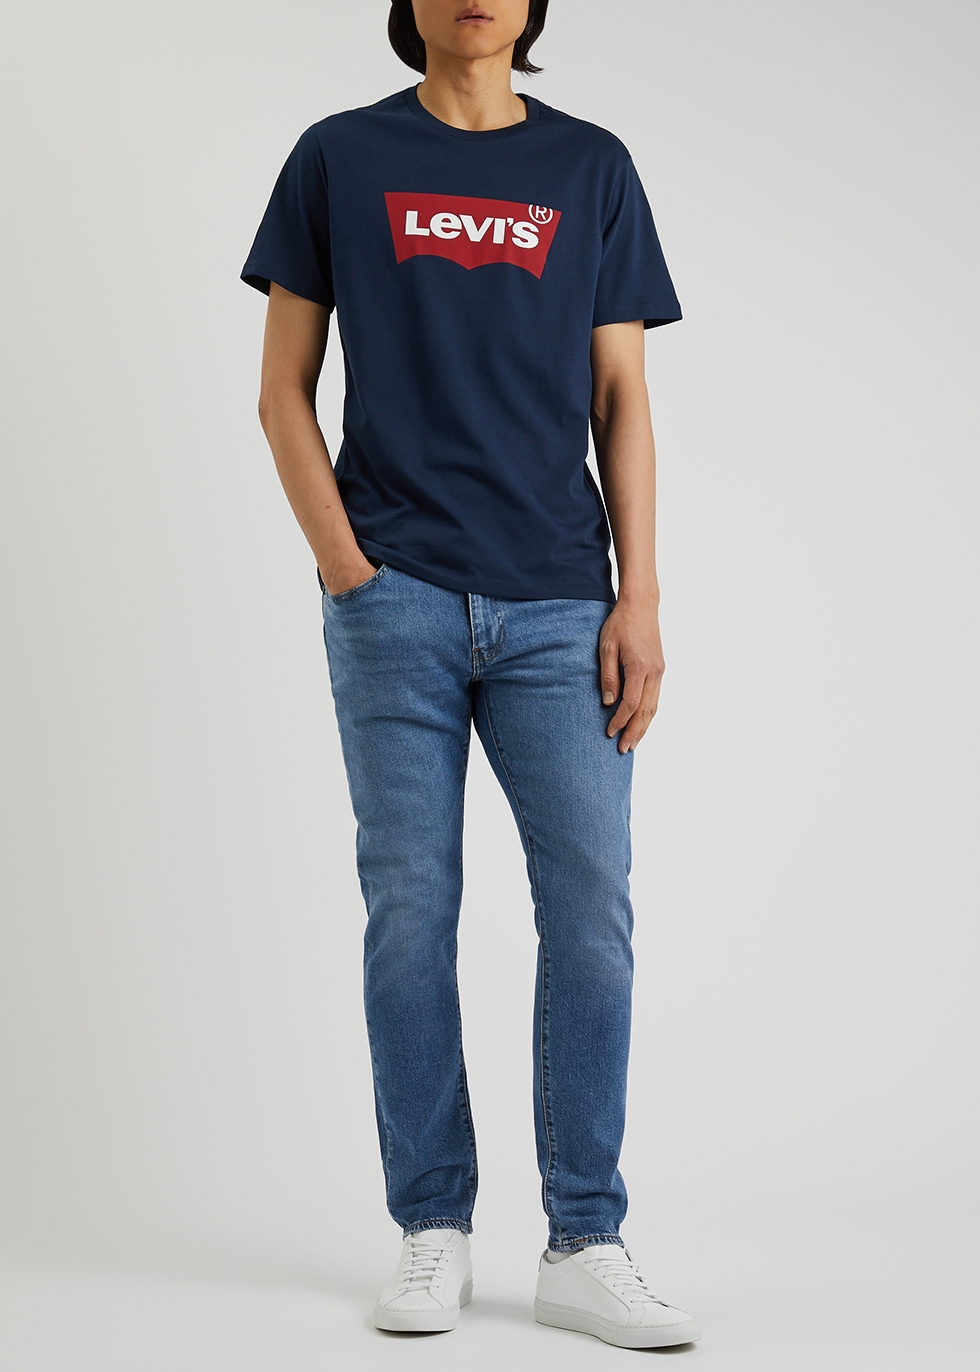 Levi's Black cotton T-shirt - Harvey Nichols